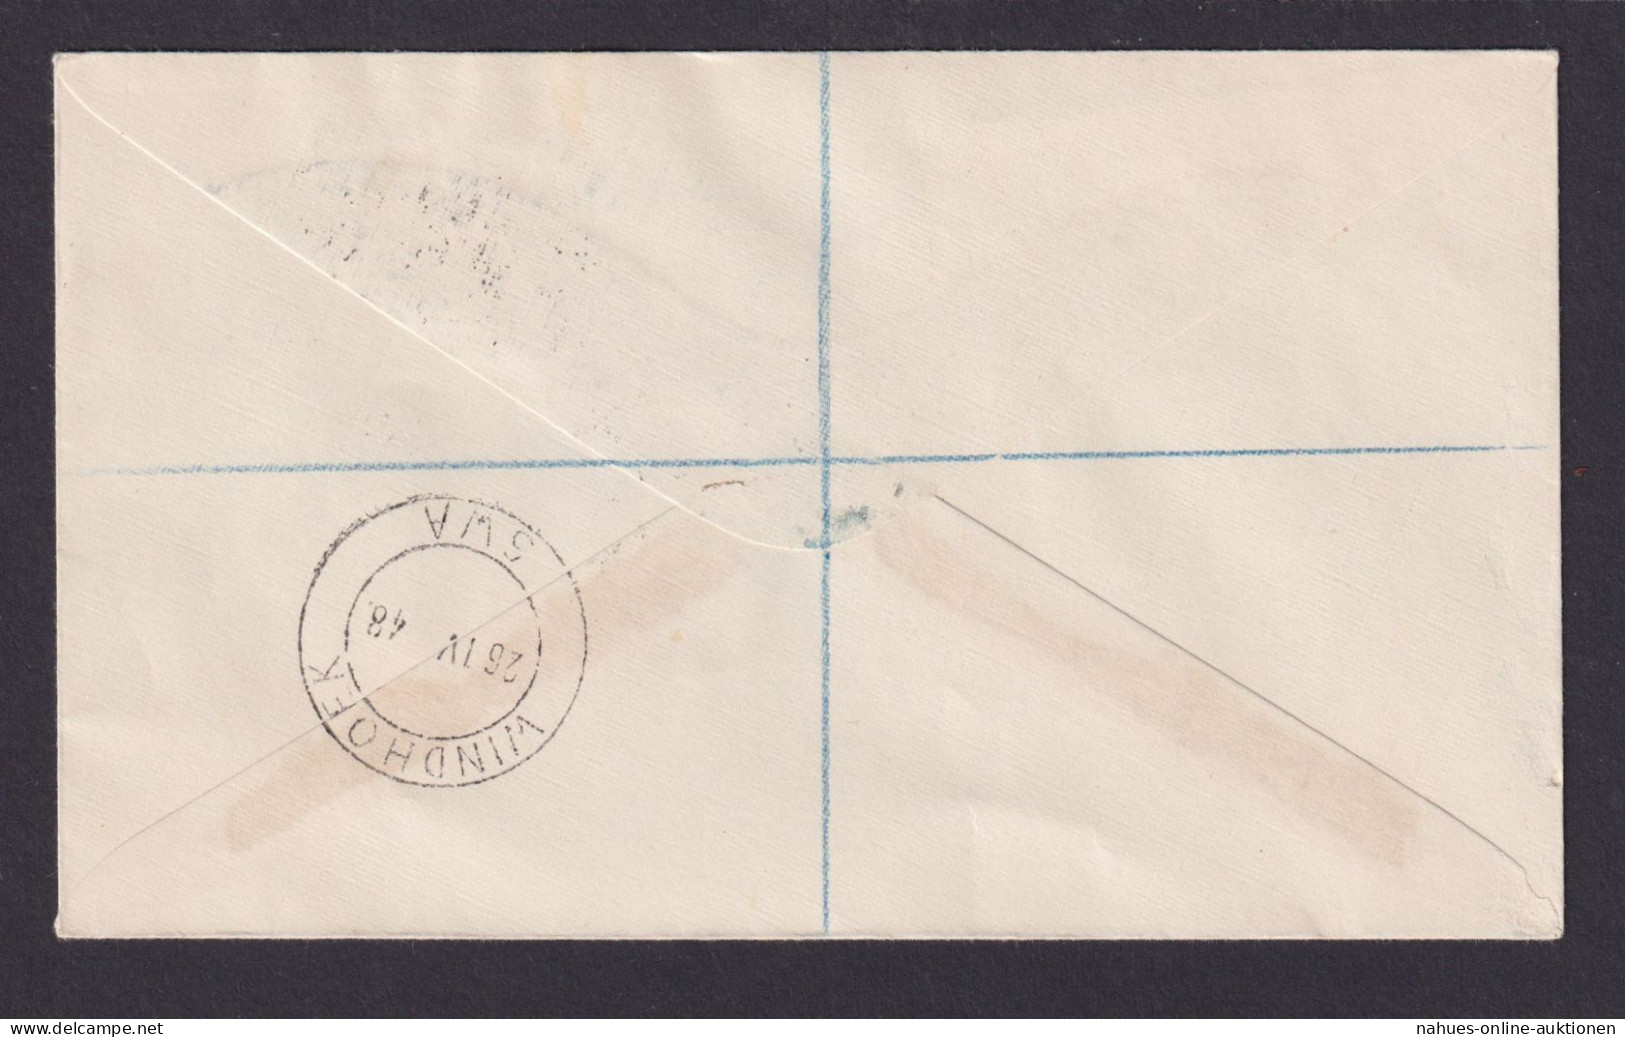 Südafrika Brief Silberhochzeit George VI + Elisabeth Viol. L1 Windhoek 1948 - Briefe U. Dokumente